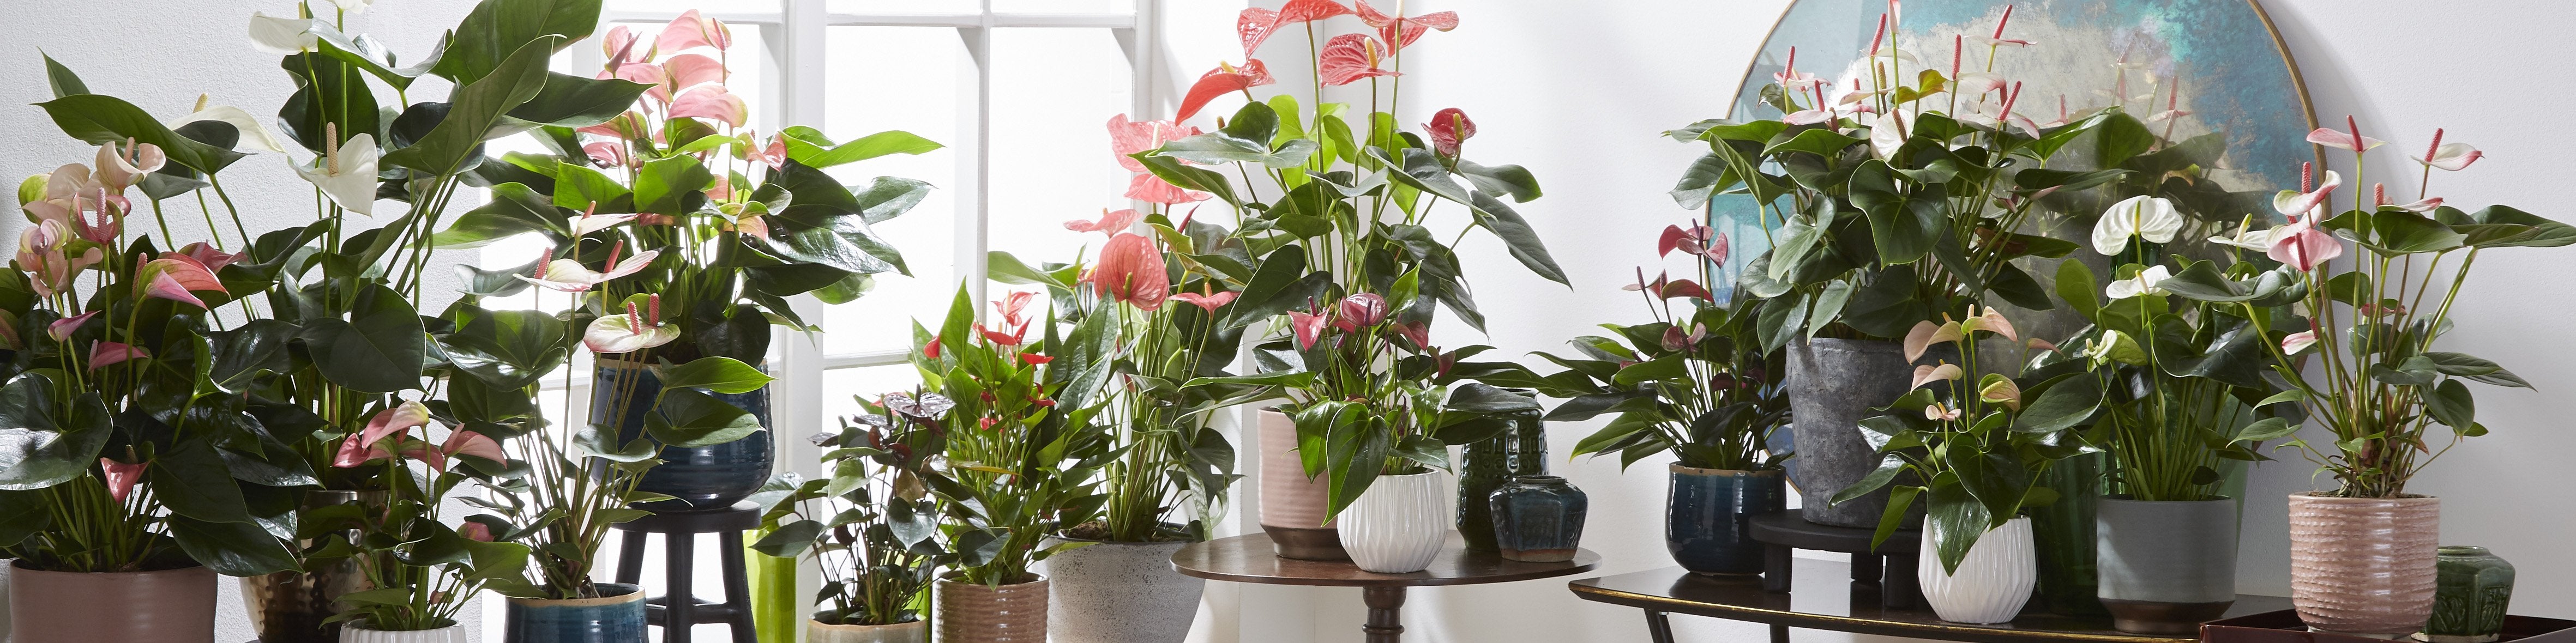 Flamingo plant - Anthurium | Bakker.com